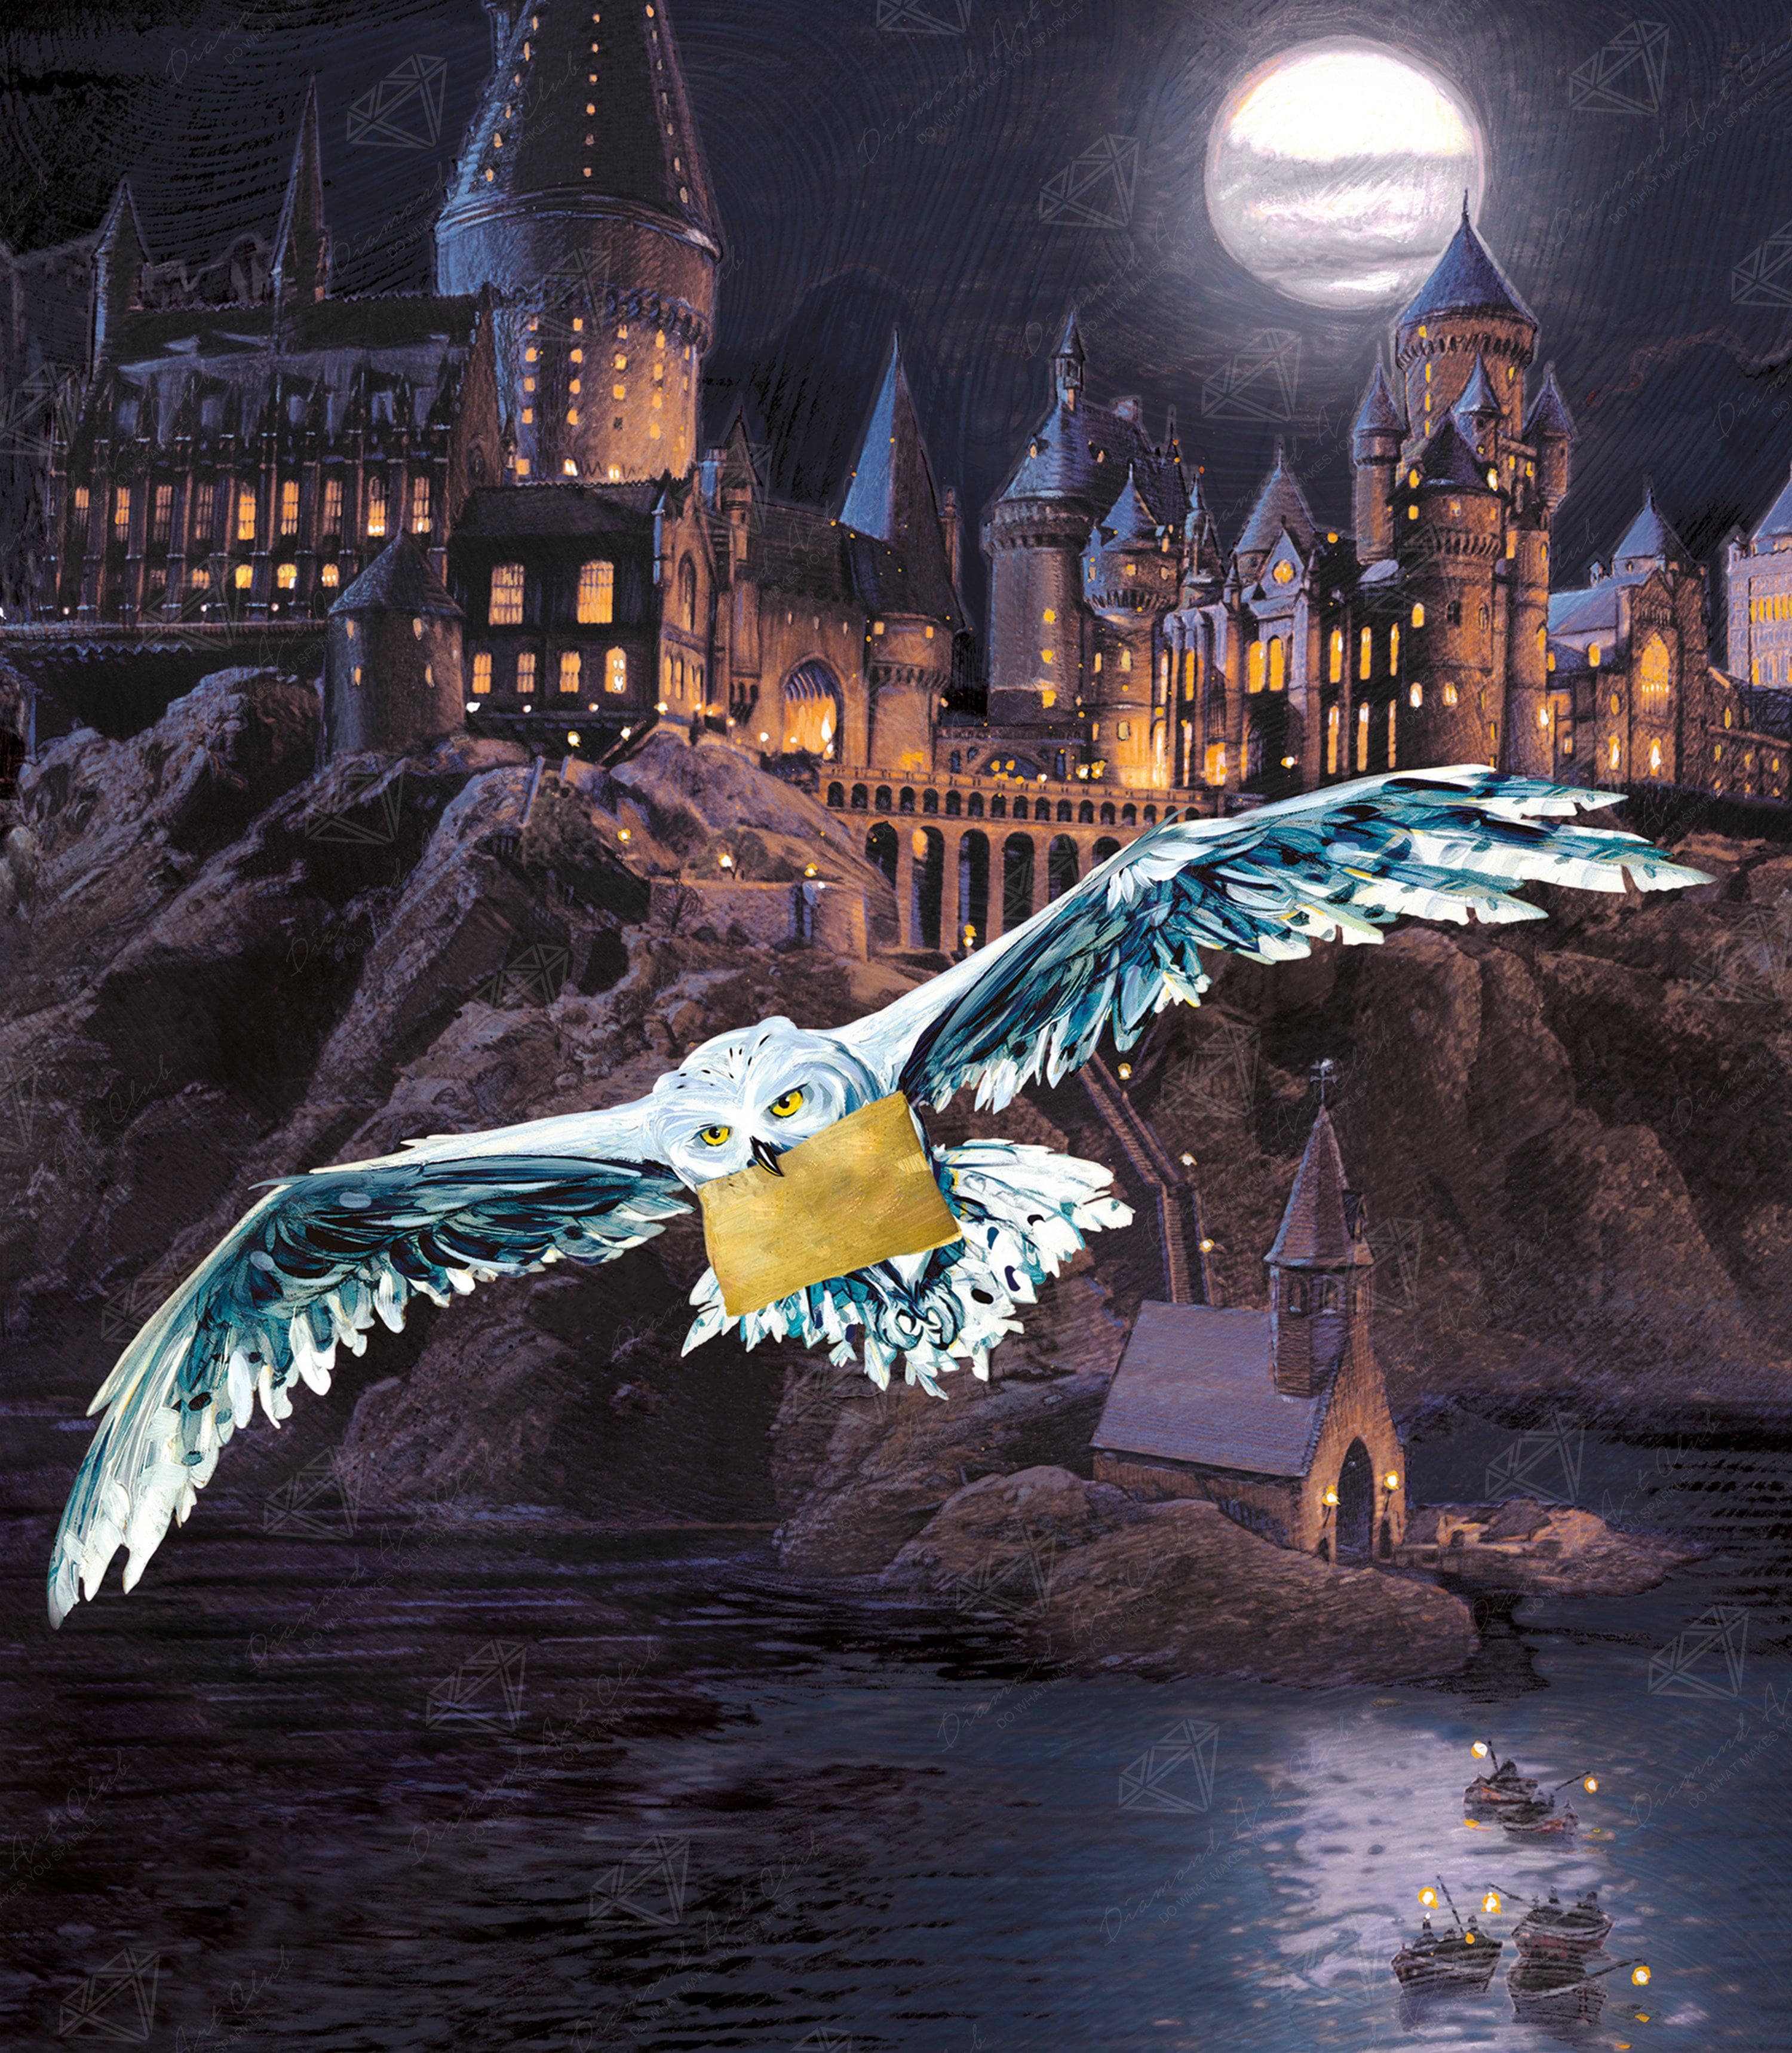 Diamond Painting Harry Potter - De Goedkoopste